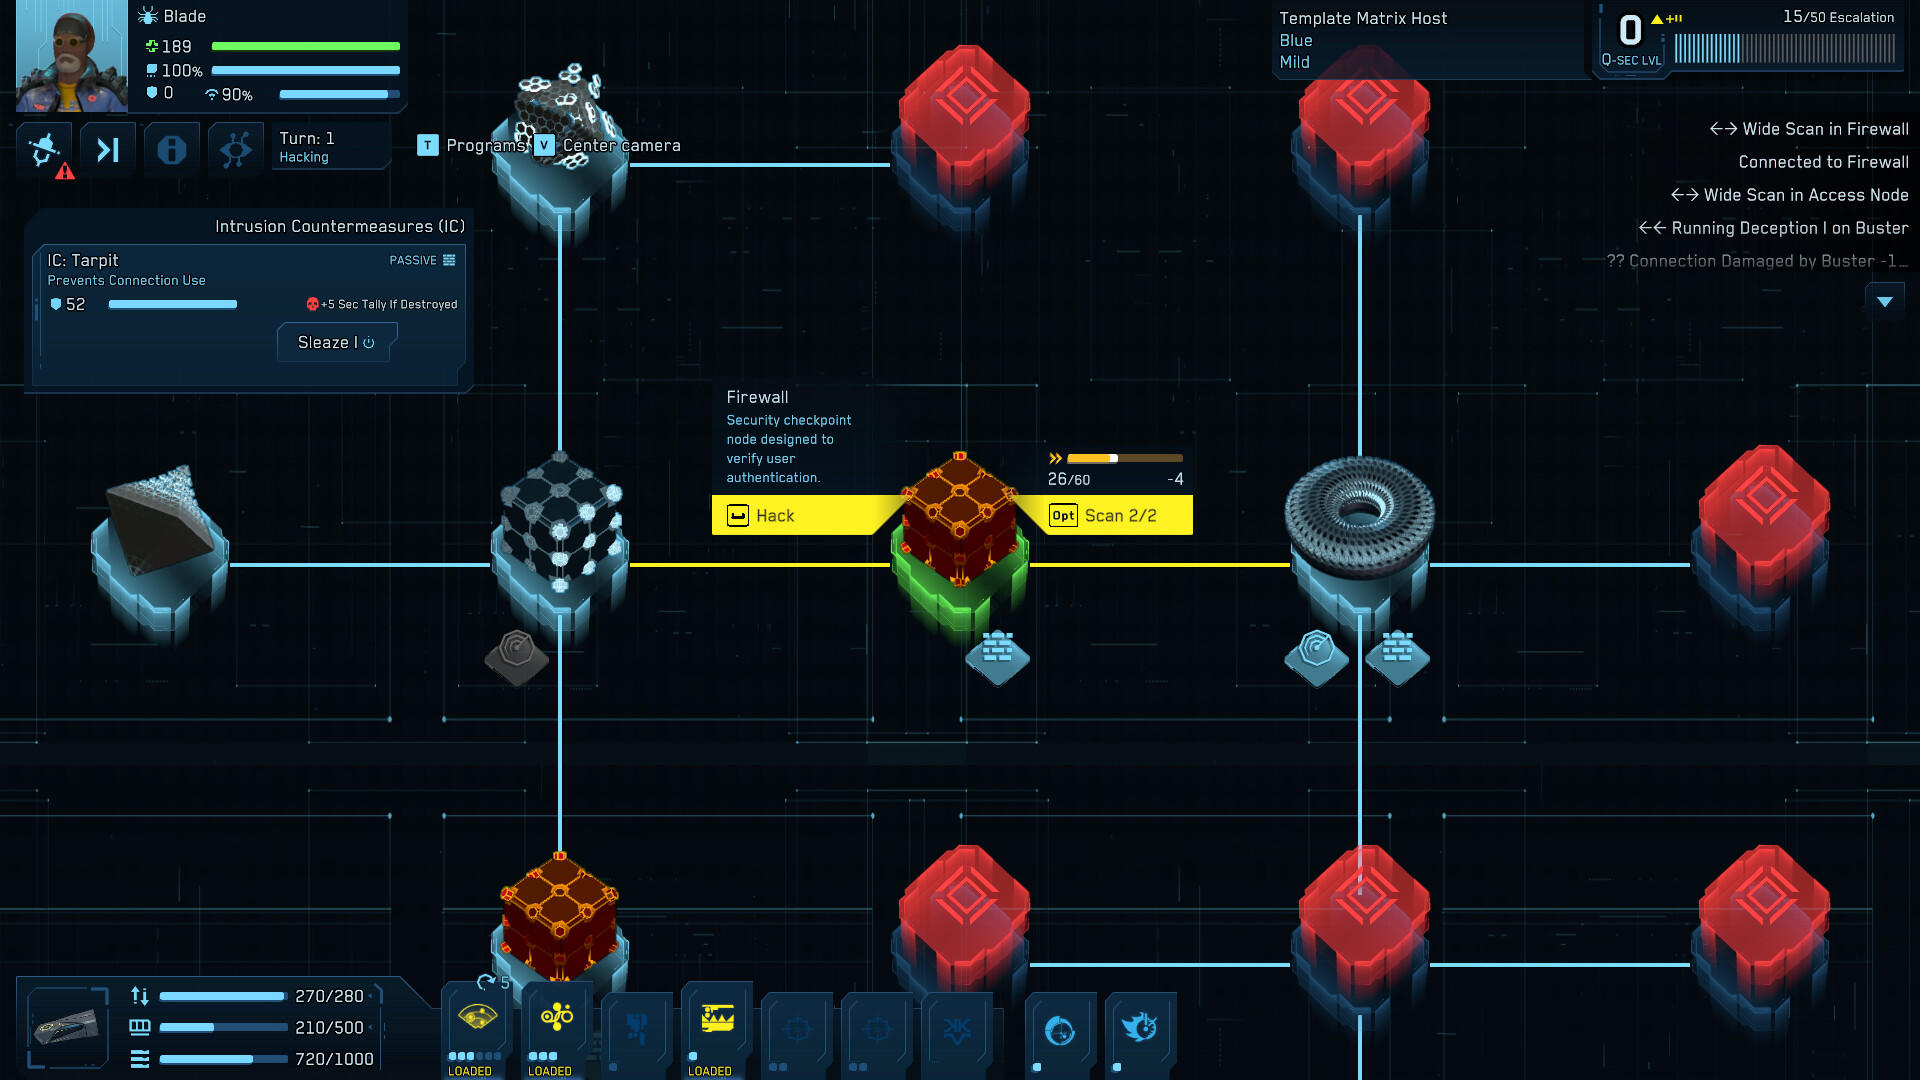 Screenshot of Cyber Knights: Flashpoint